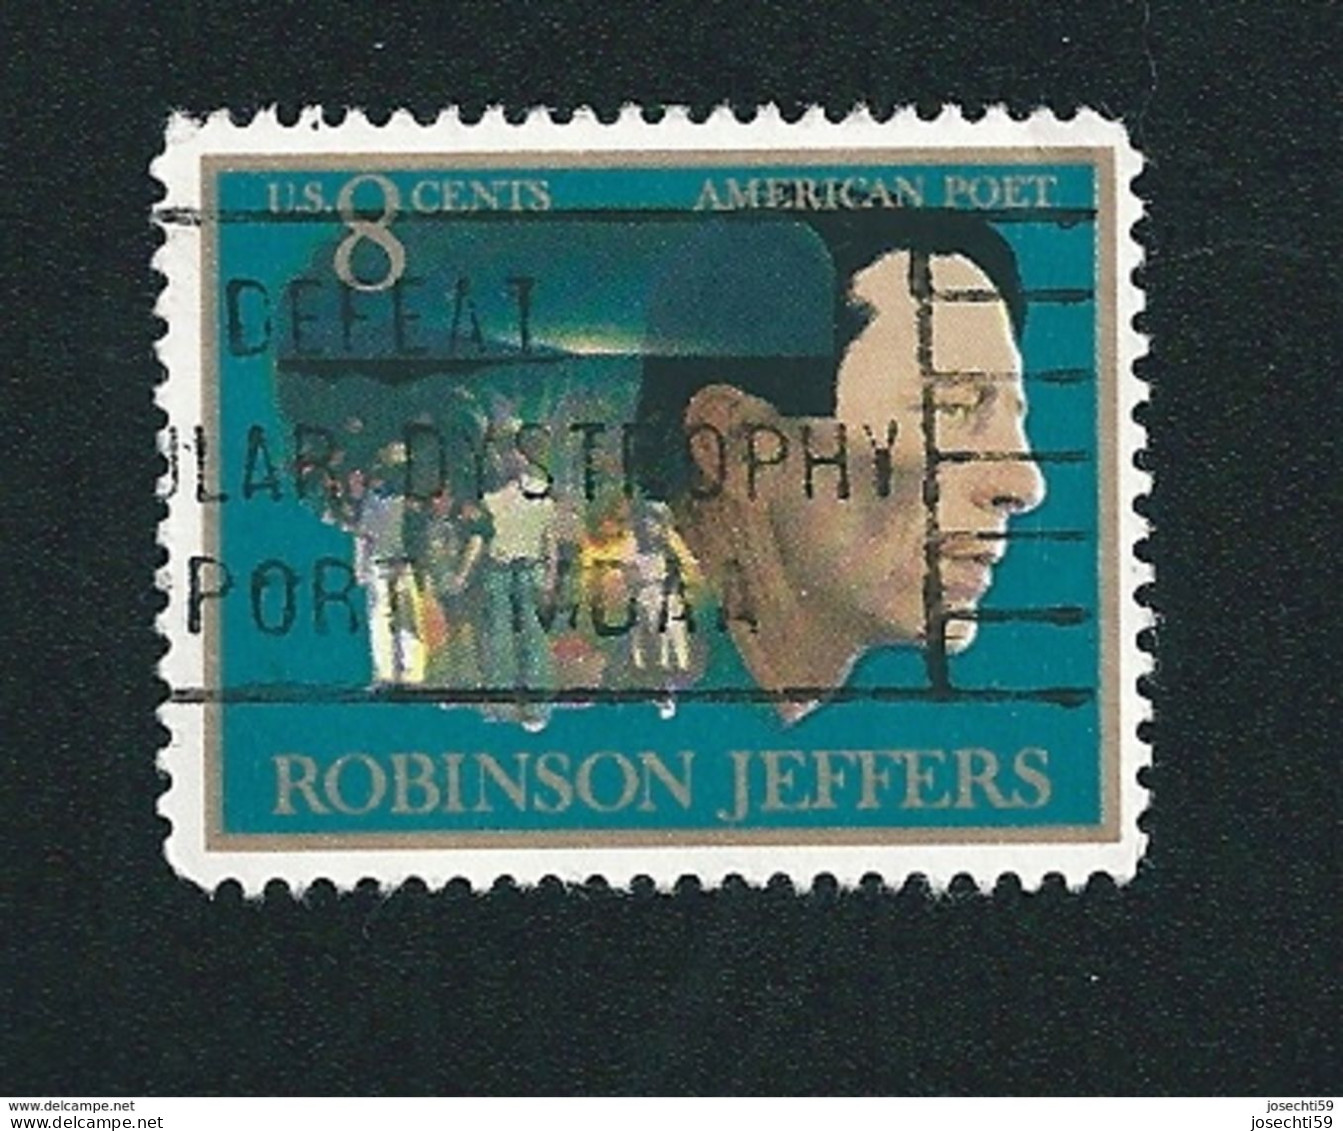 N° 1002 John Robinson Jeffers (1887-1962), American Poet   Timbre Etats-Unis (1973)   Oblitéré - Gebraucht